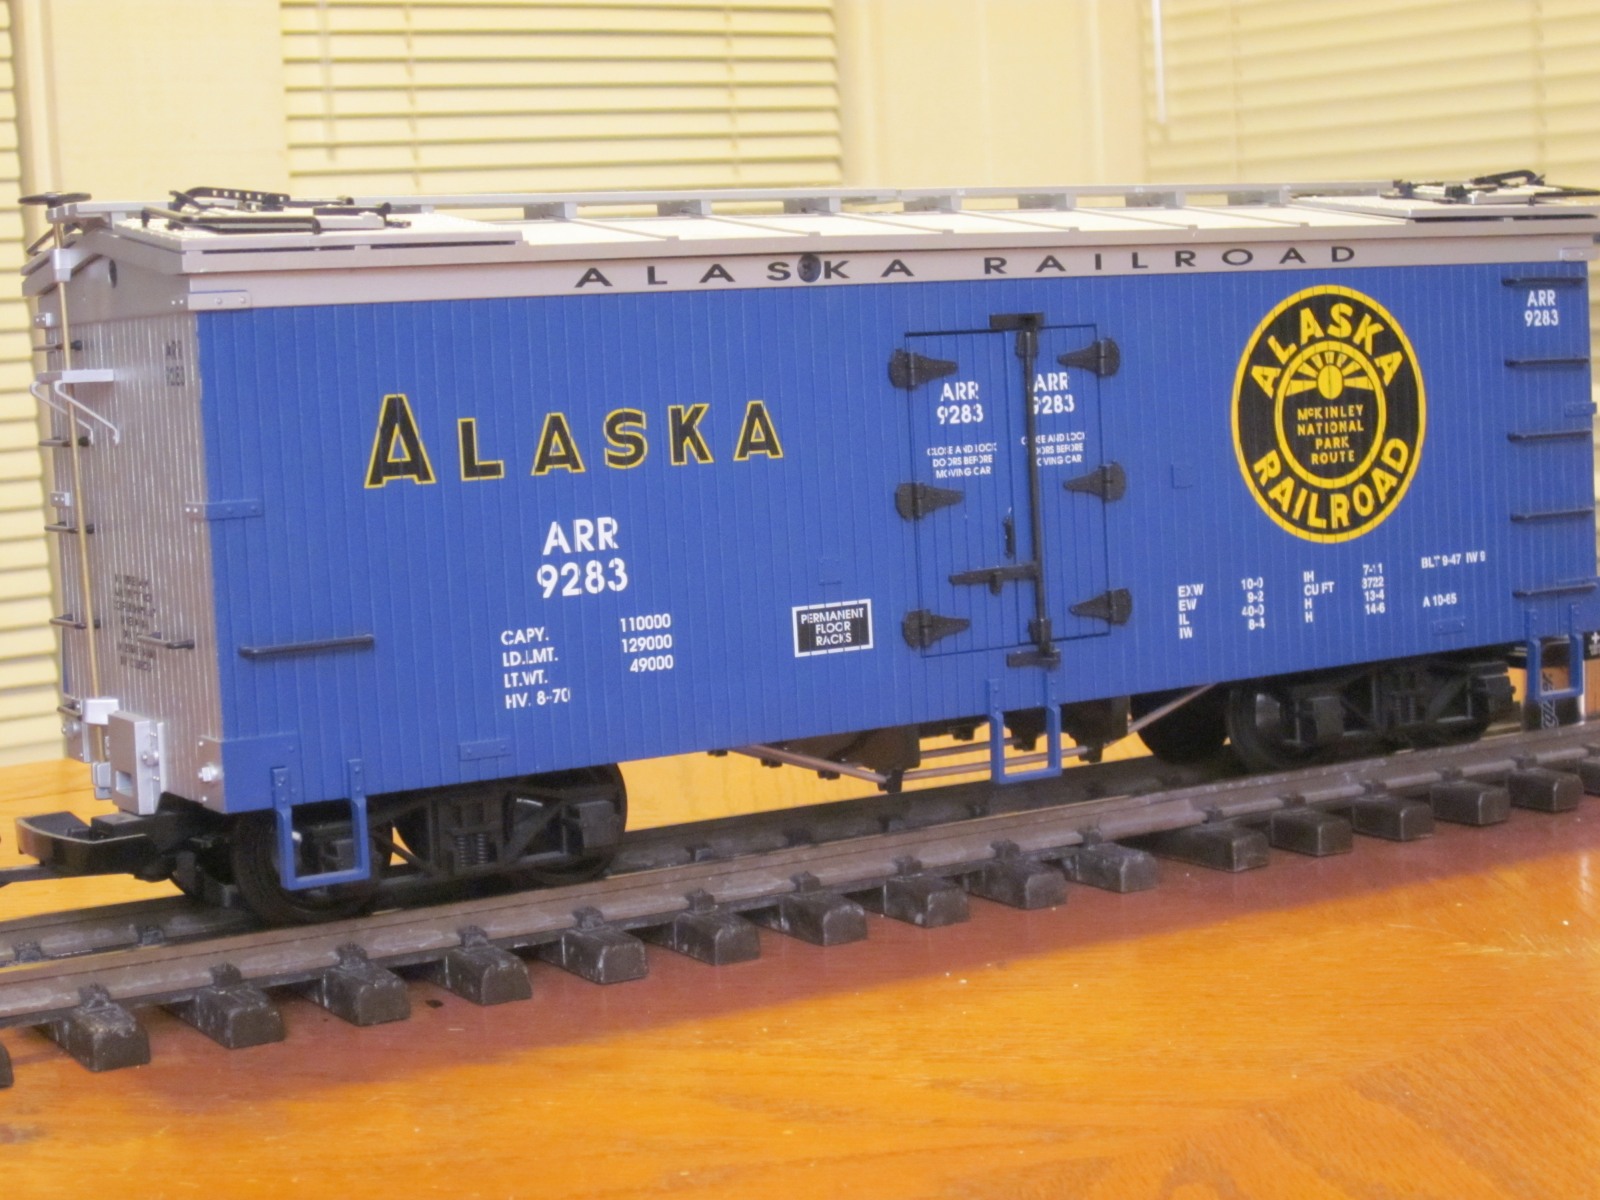 R16204C Alaska RR (Blue Silver) ARR 9283